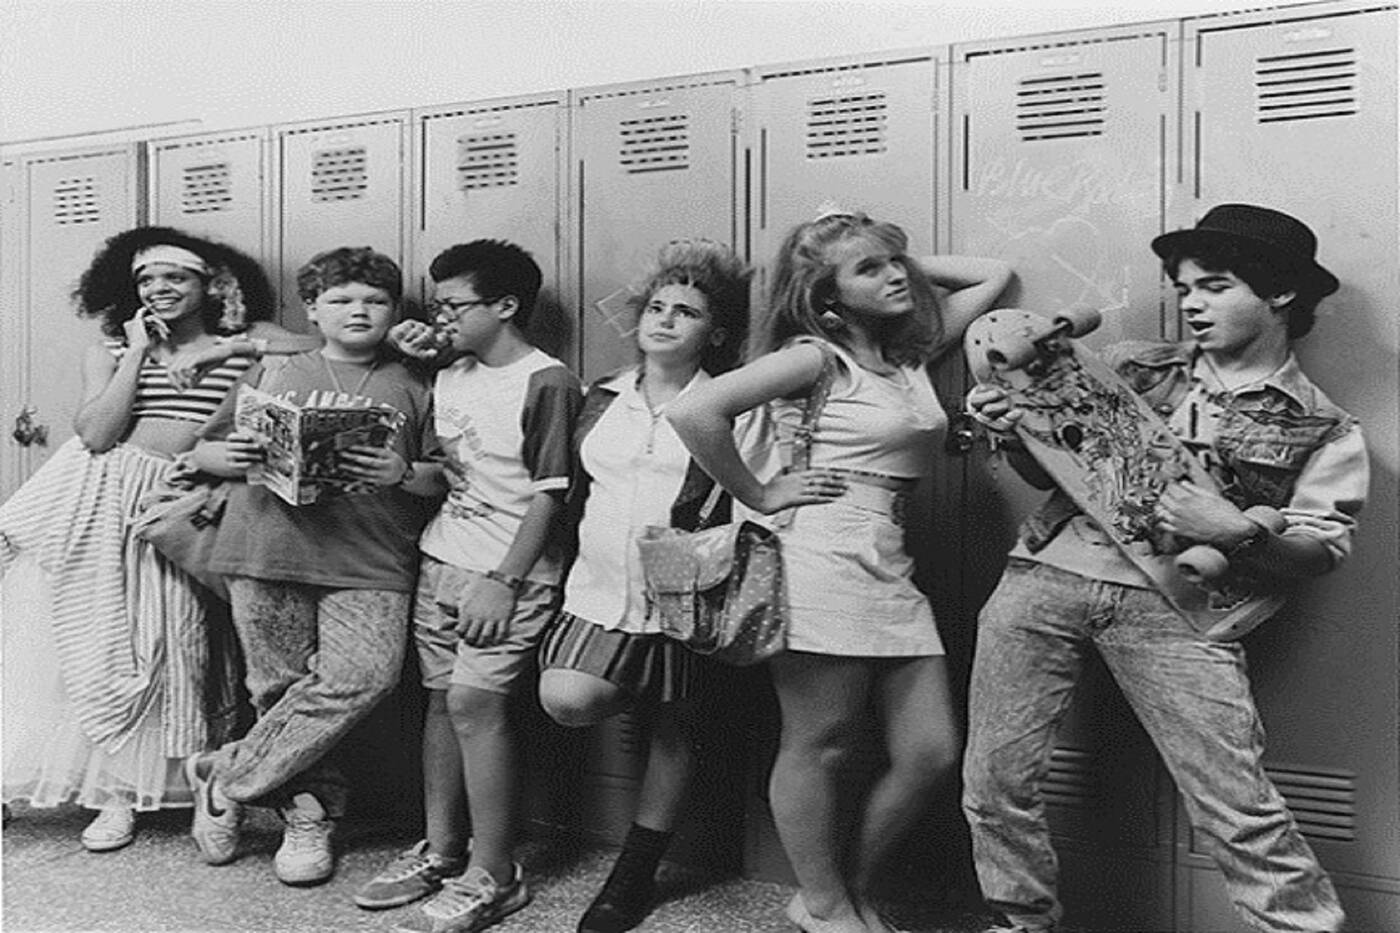 The Kids of Degrassi Street